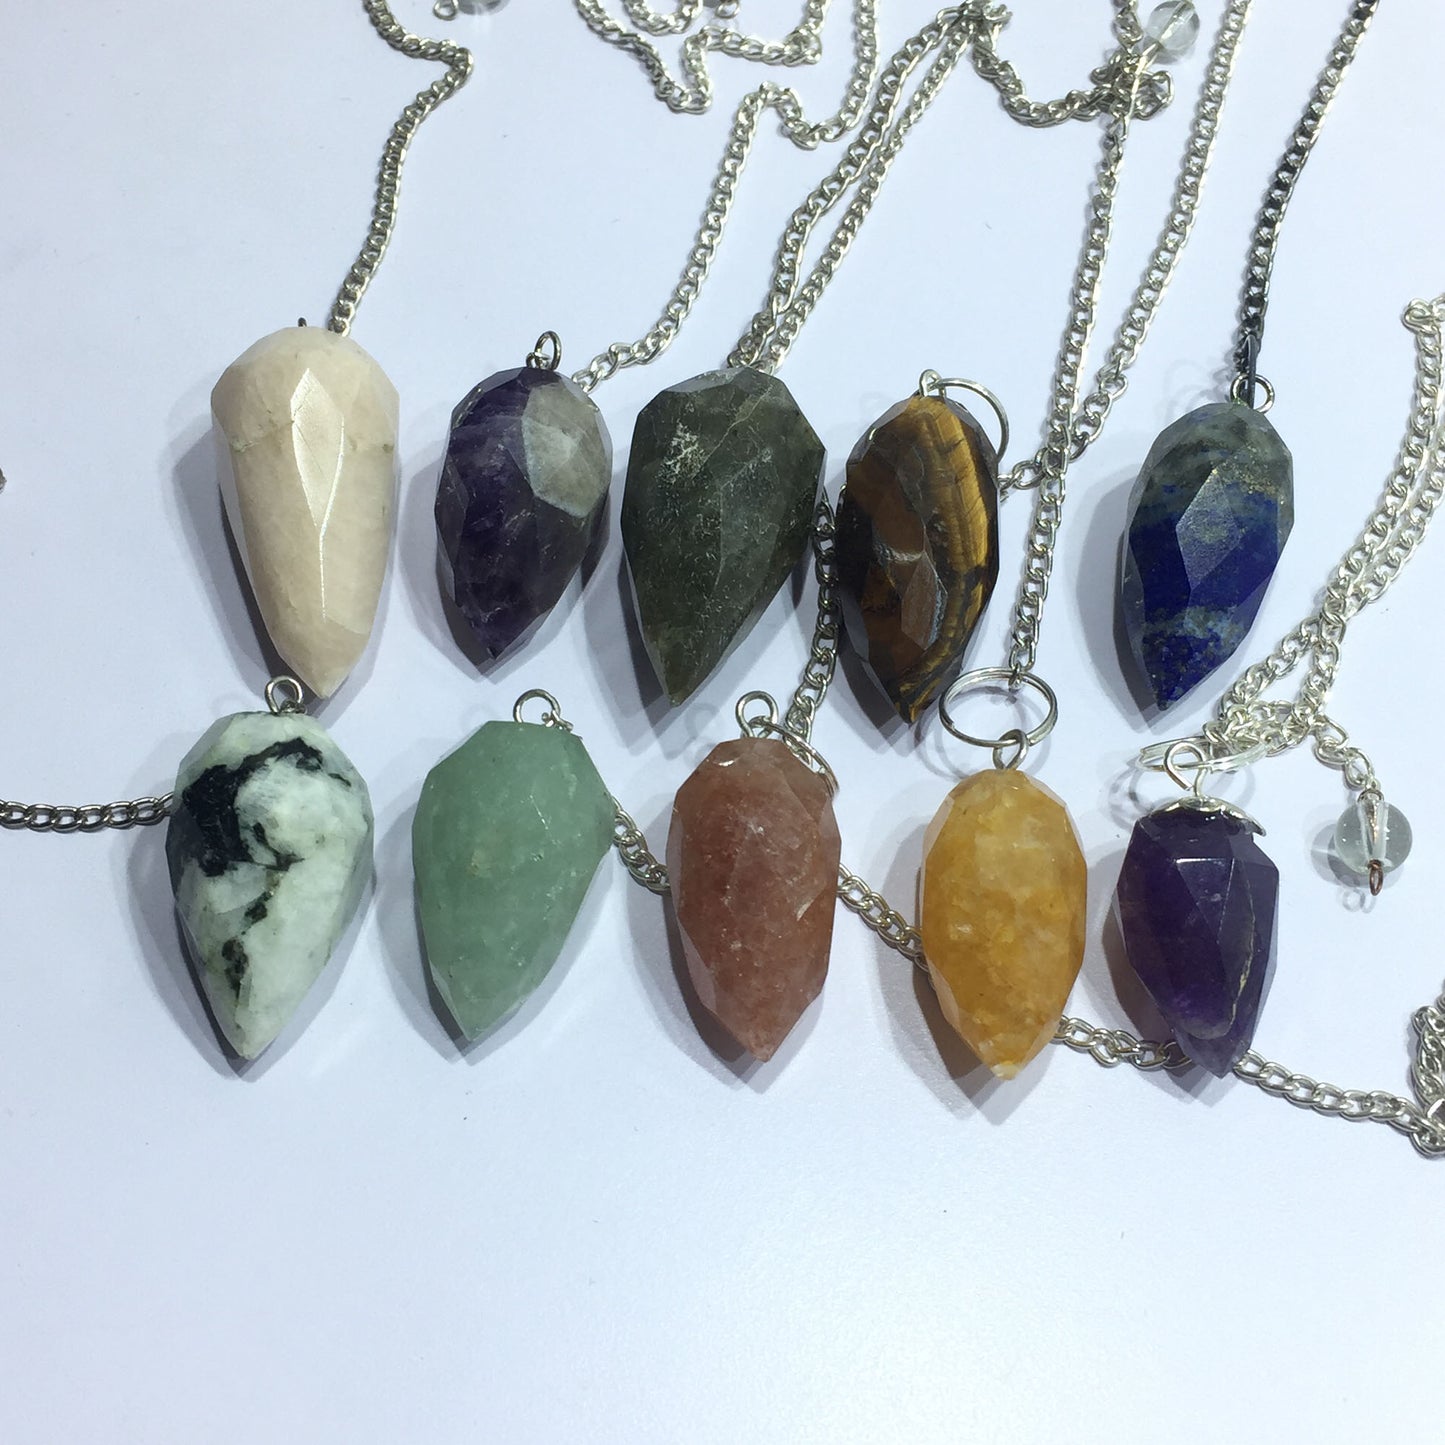 Mix Stones Drop Cut Pendulum Healing Jewelry Wholesale Lot